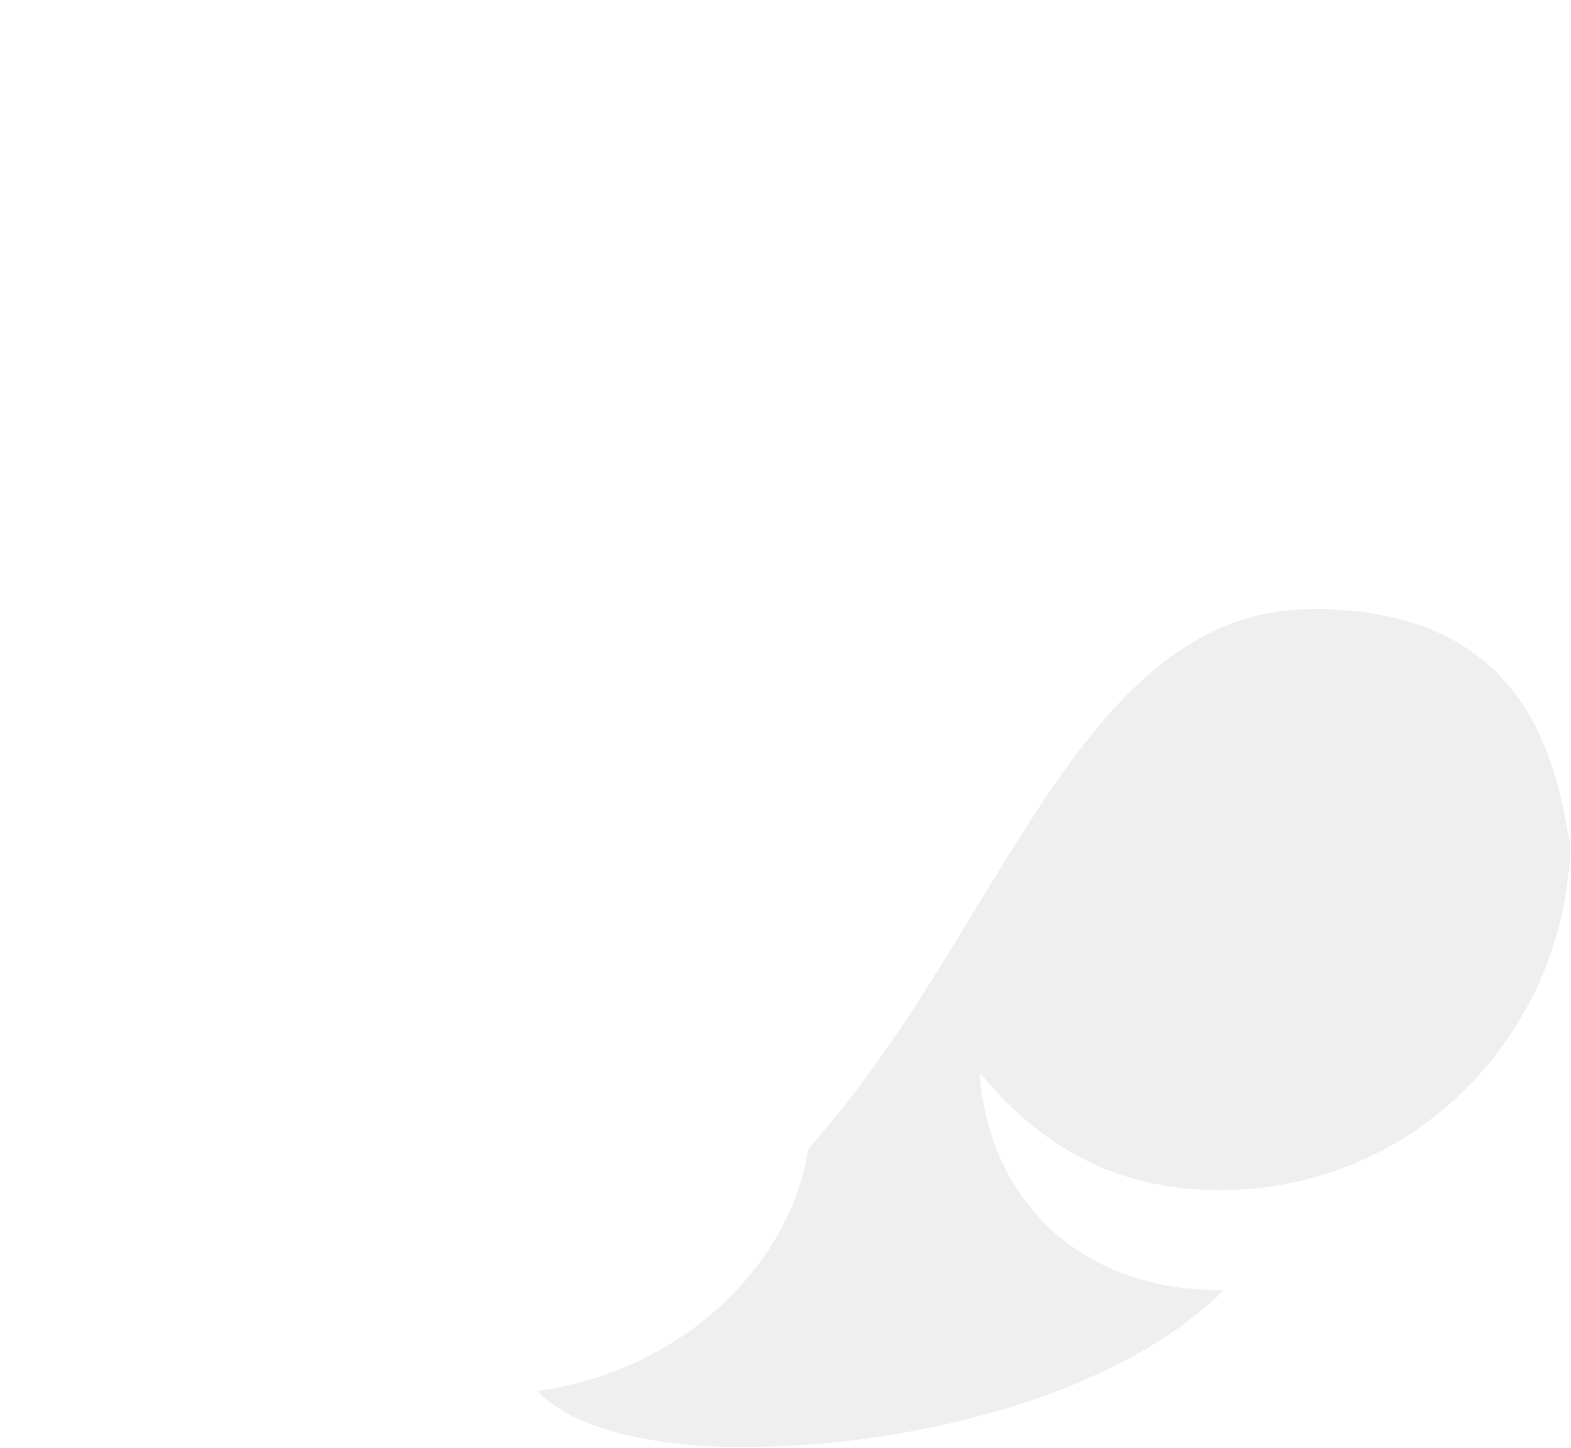 Capgemini logo for dark backgrounds (transparent PNG)